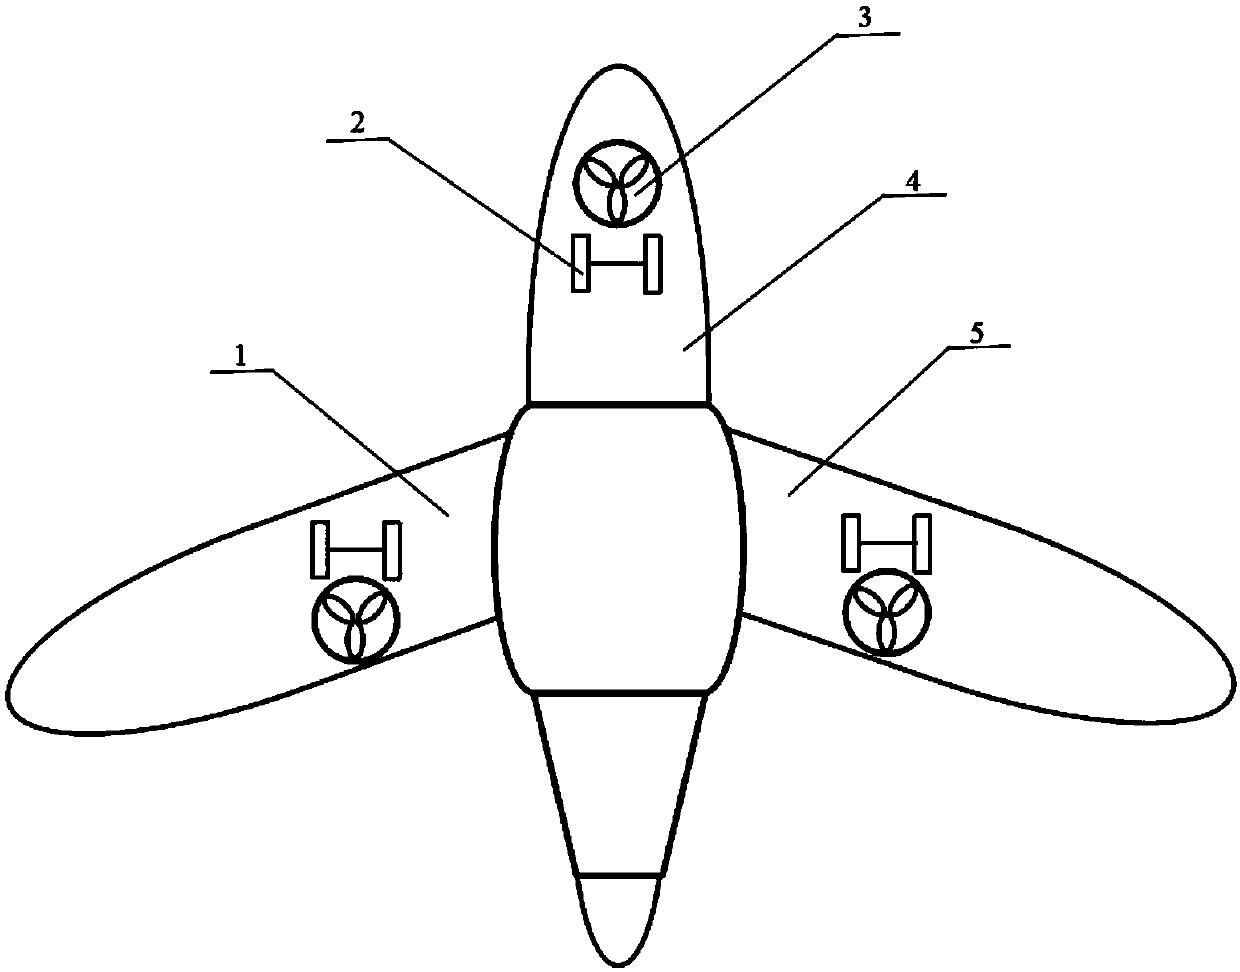 Novel landing gear and manner